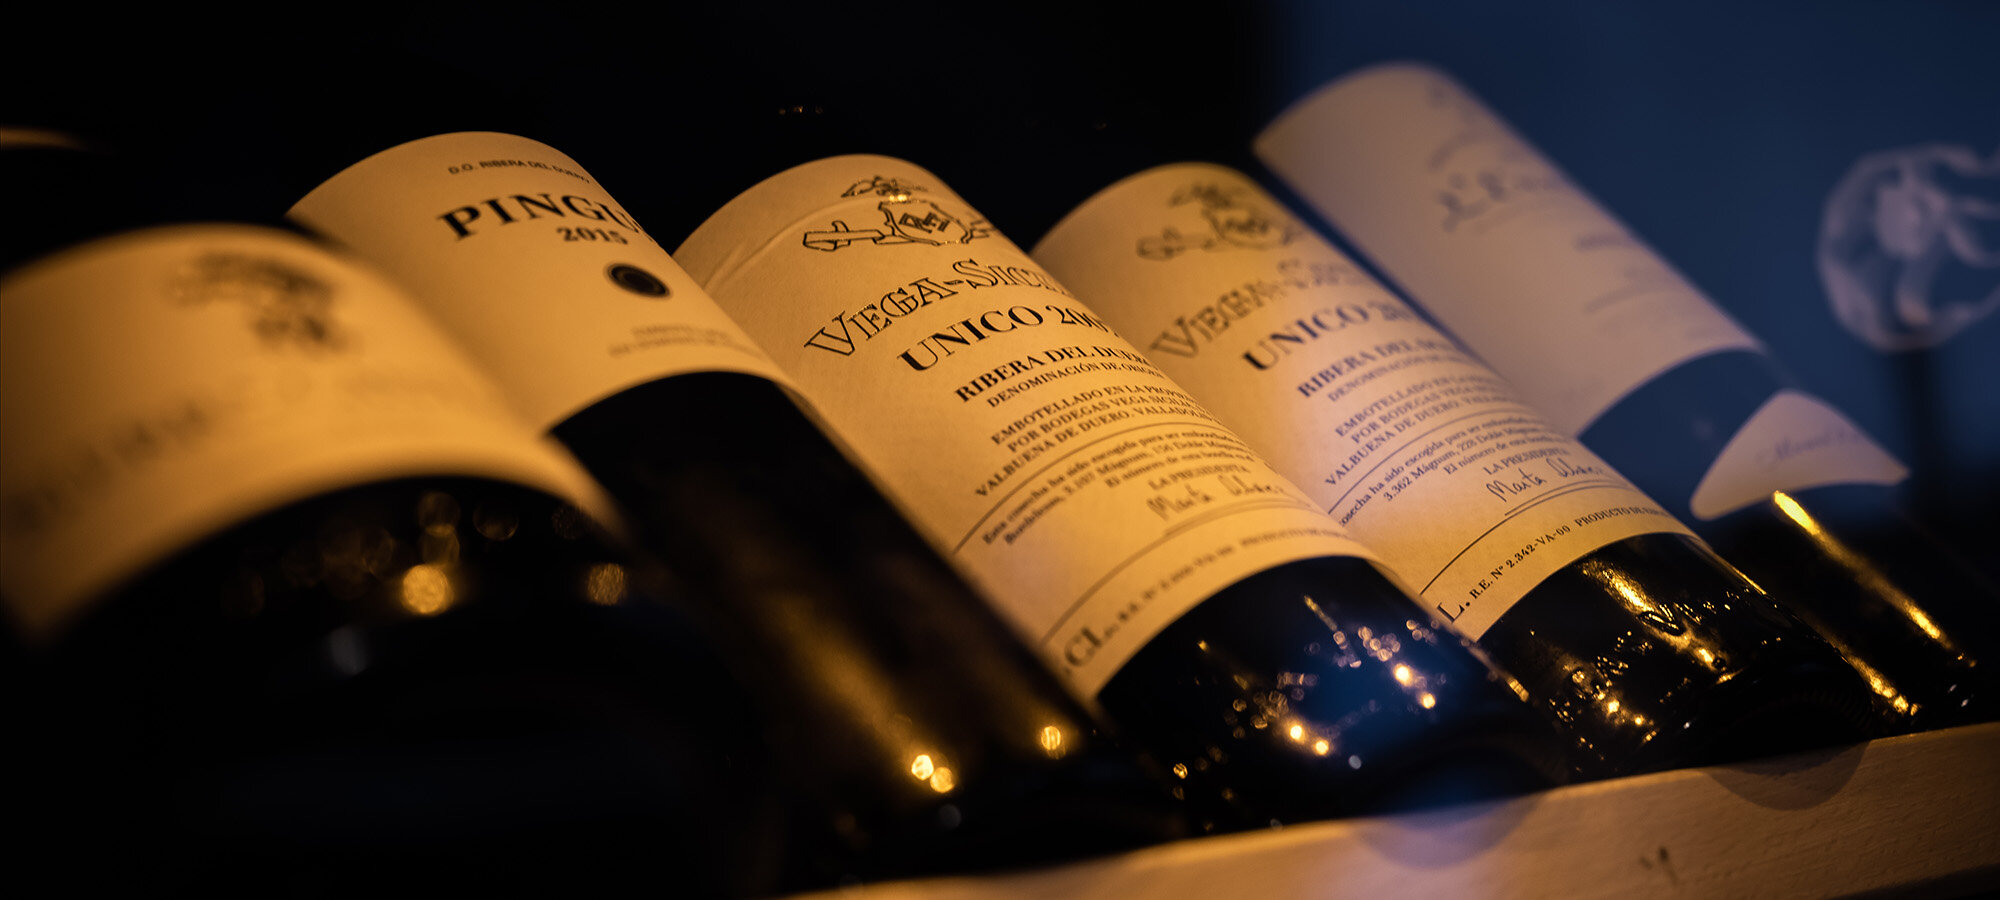 Wine list selections including Vega-Sicilia at Xiquet